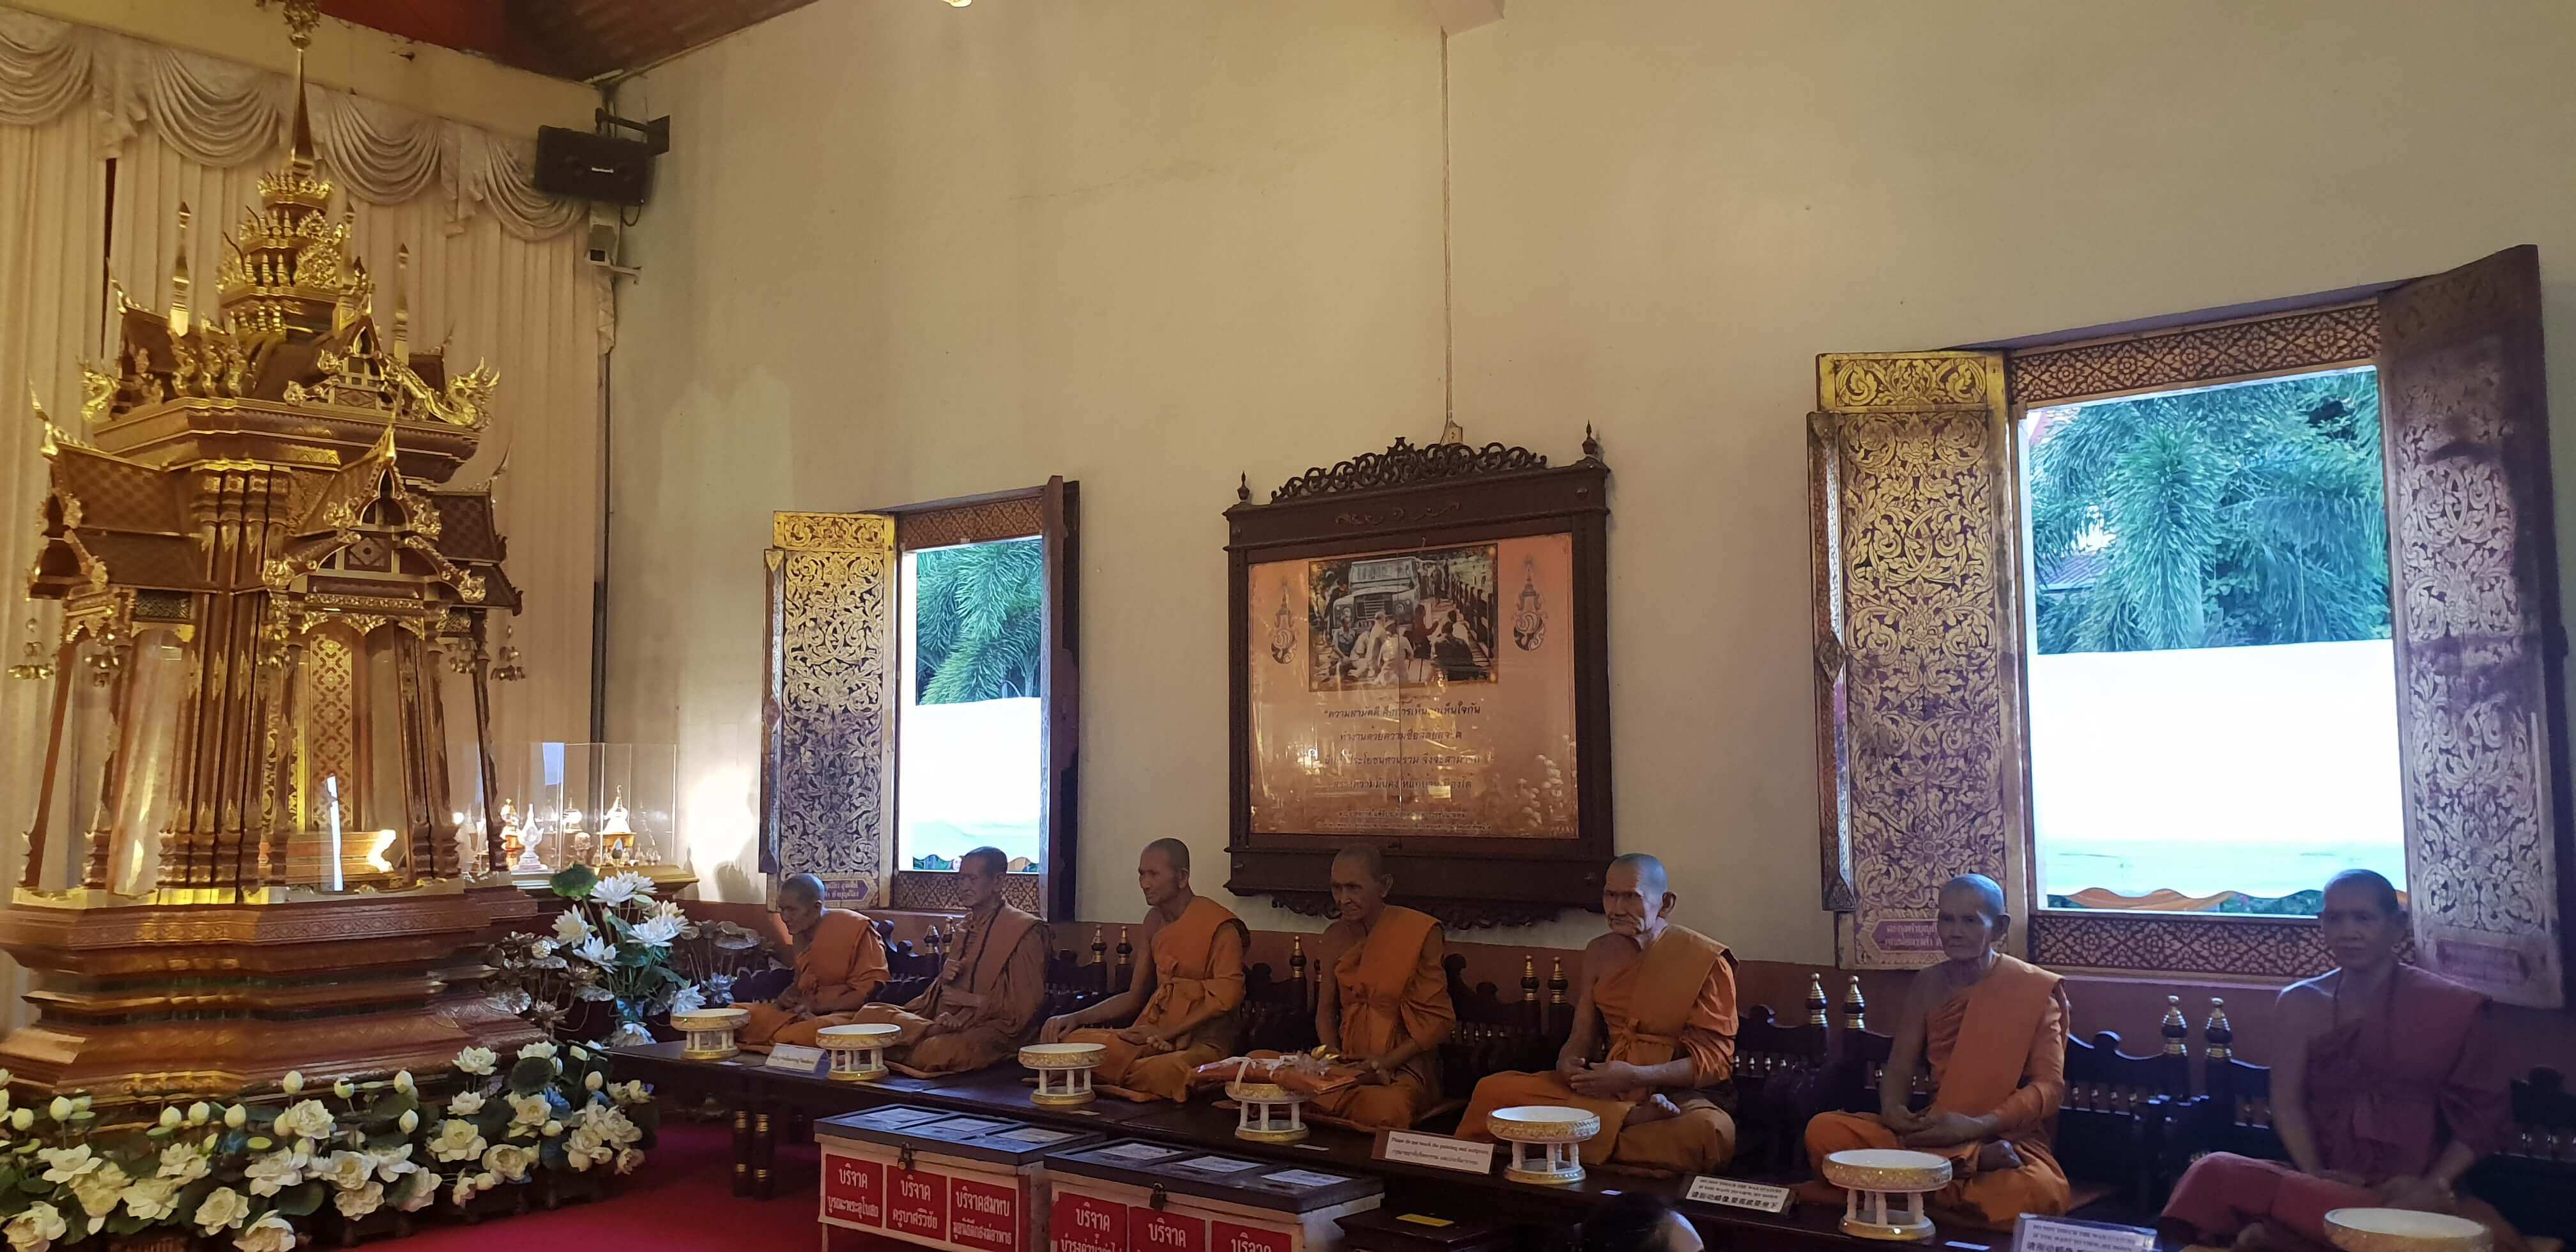 Lifelike wax figures of monks in Wat Phra Singh